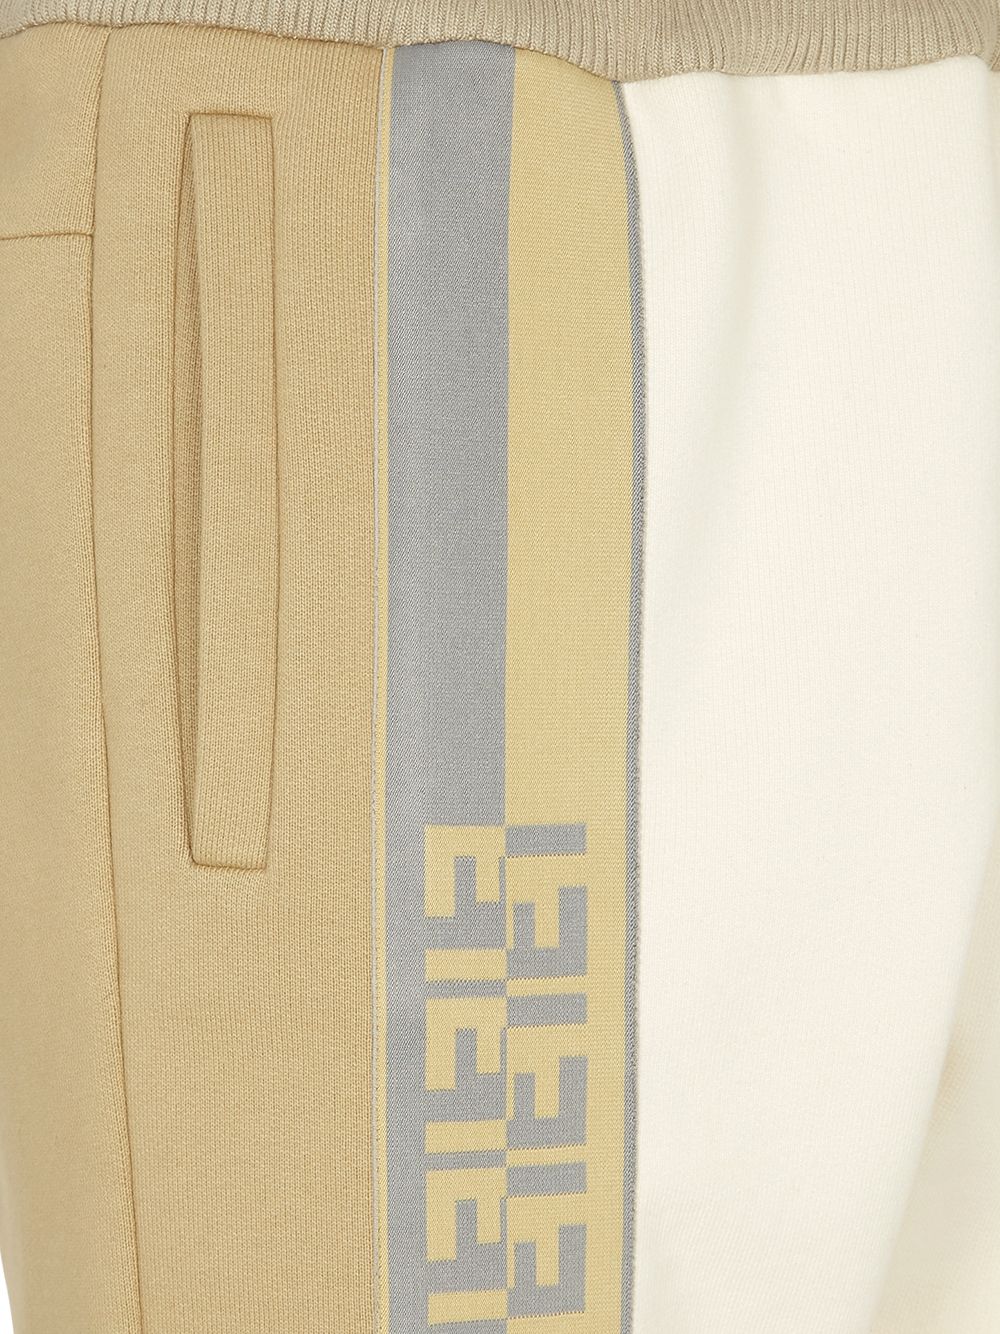 фото Fendi спортивные брюки с логотипом ff на лампасах